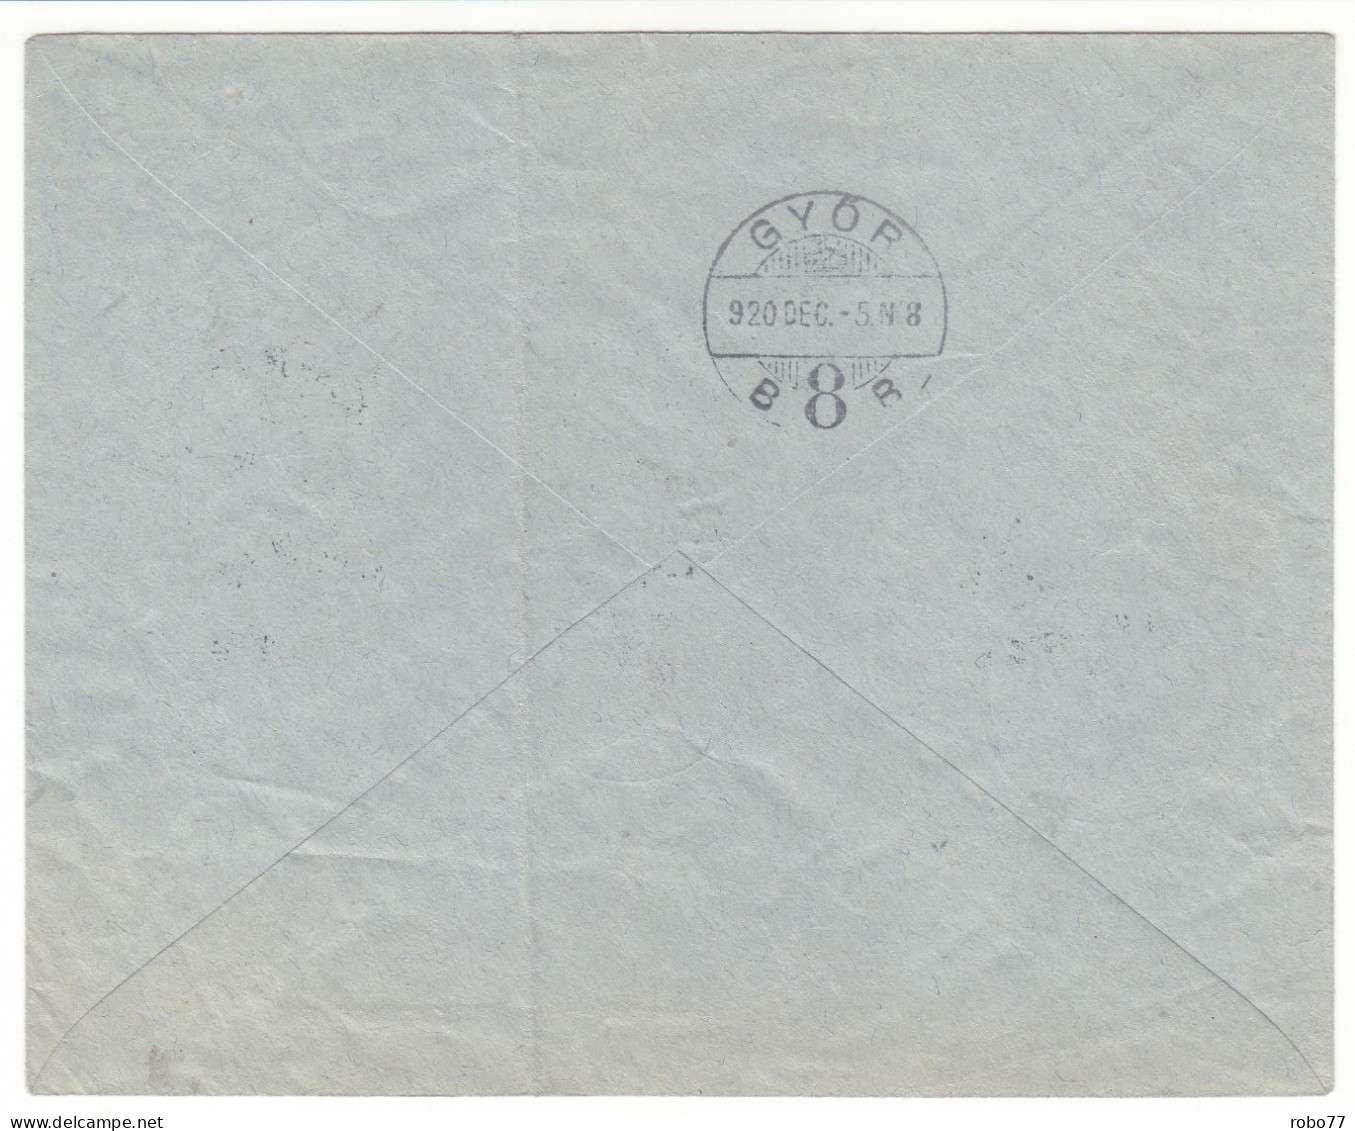 1920 Hungary Air Mail Multifranked Cover, Letter. LEGI POSTA. Budapest, Gyor. Overprint Stamps. (G13c259) - Brieven En Documenten